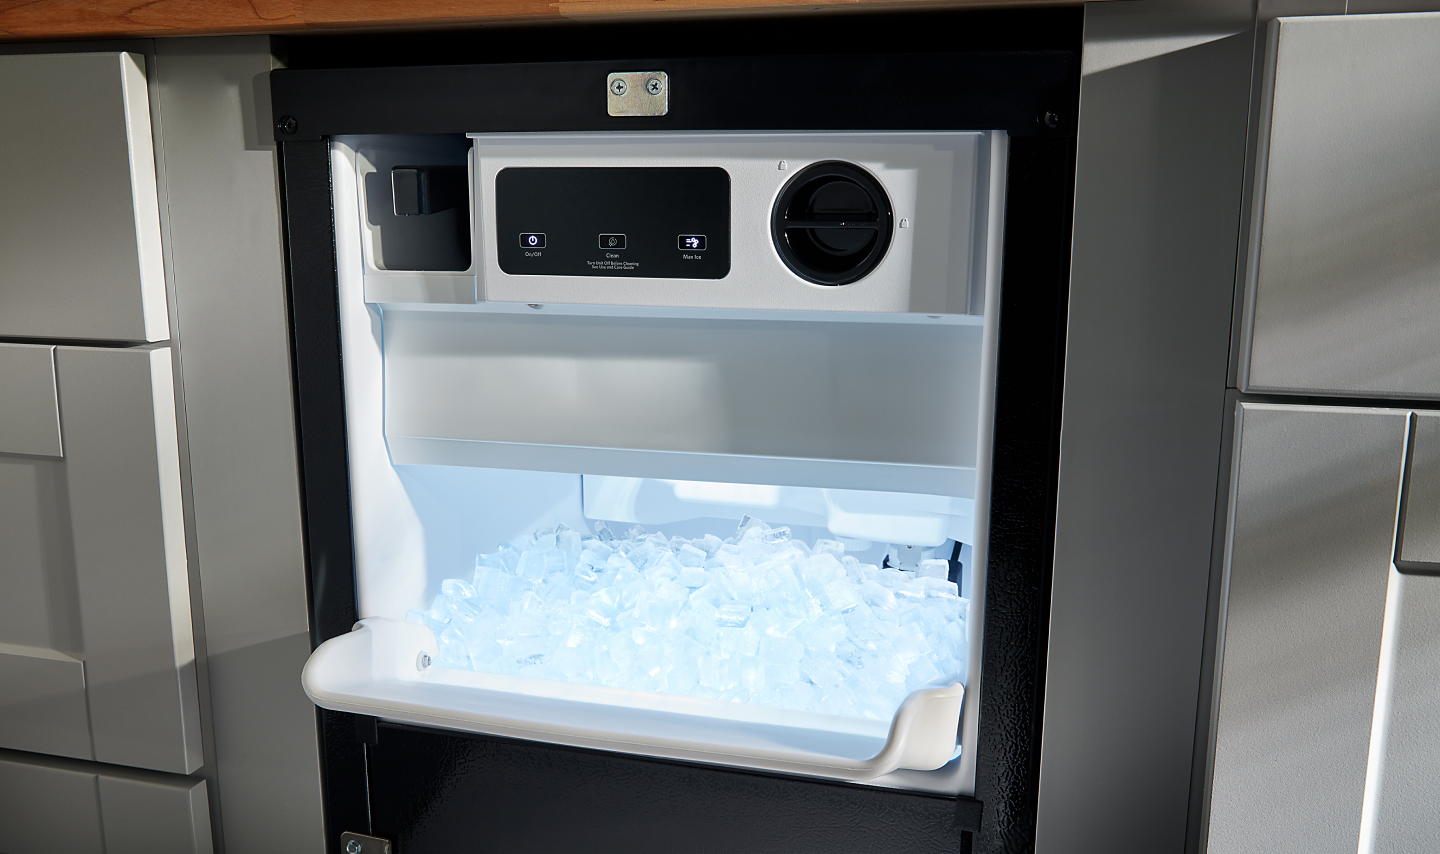 Ice machine maker Kitchen Aid 18 stainless under counter